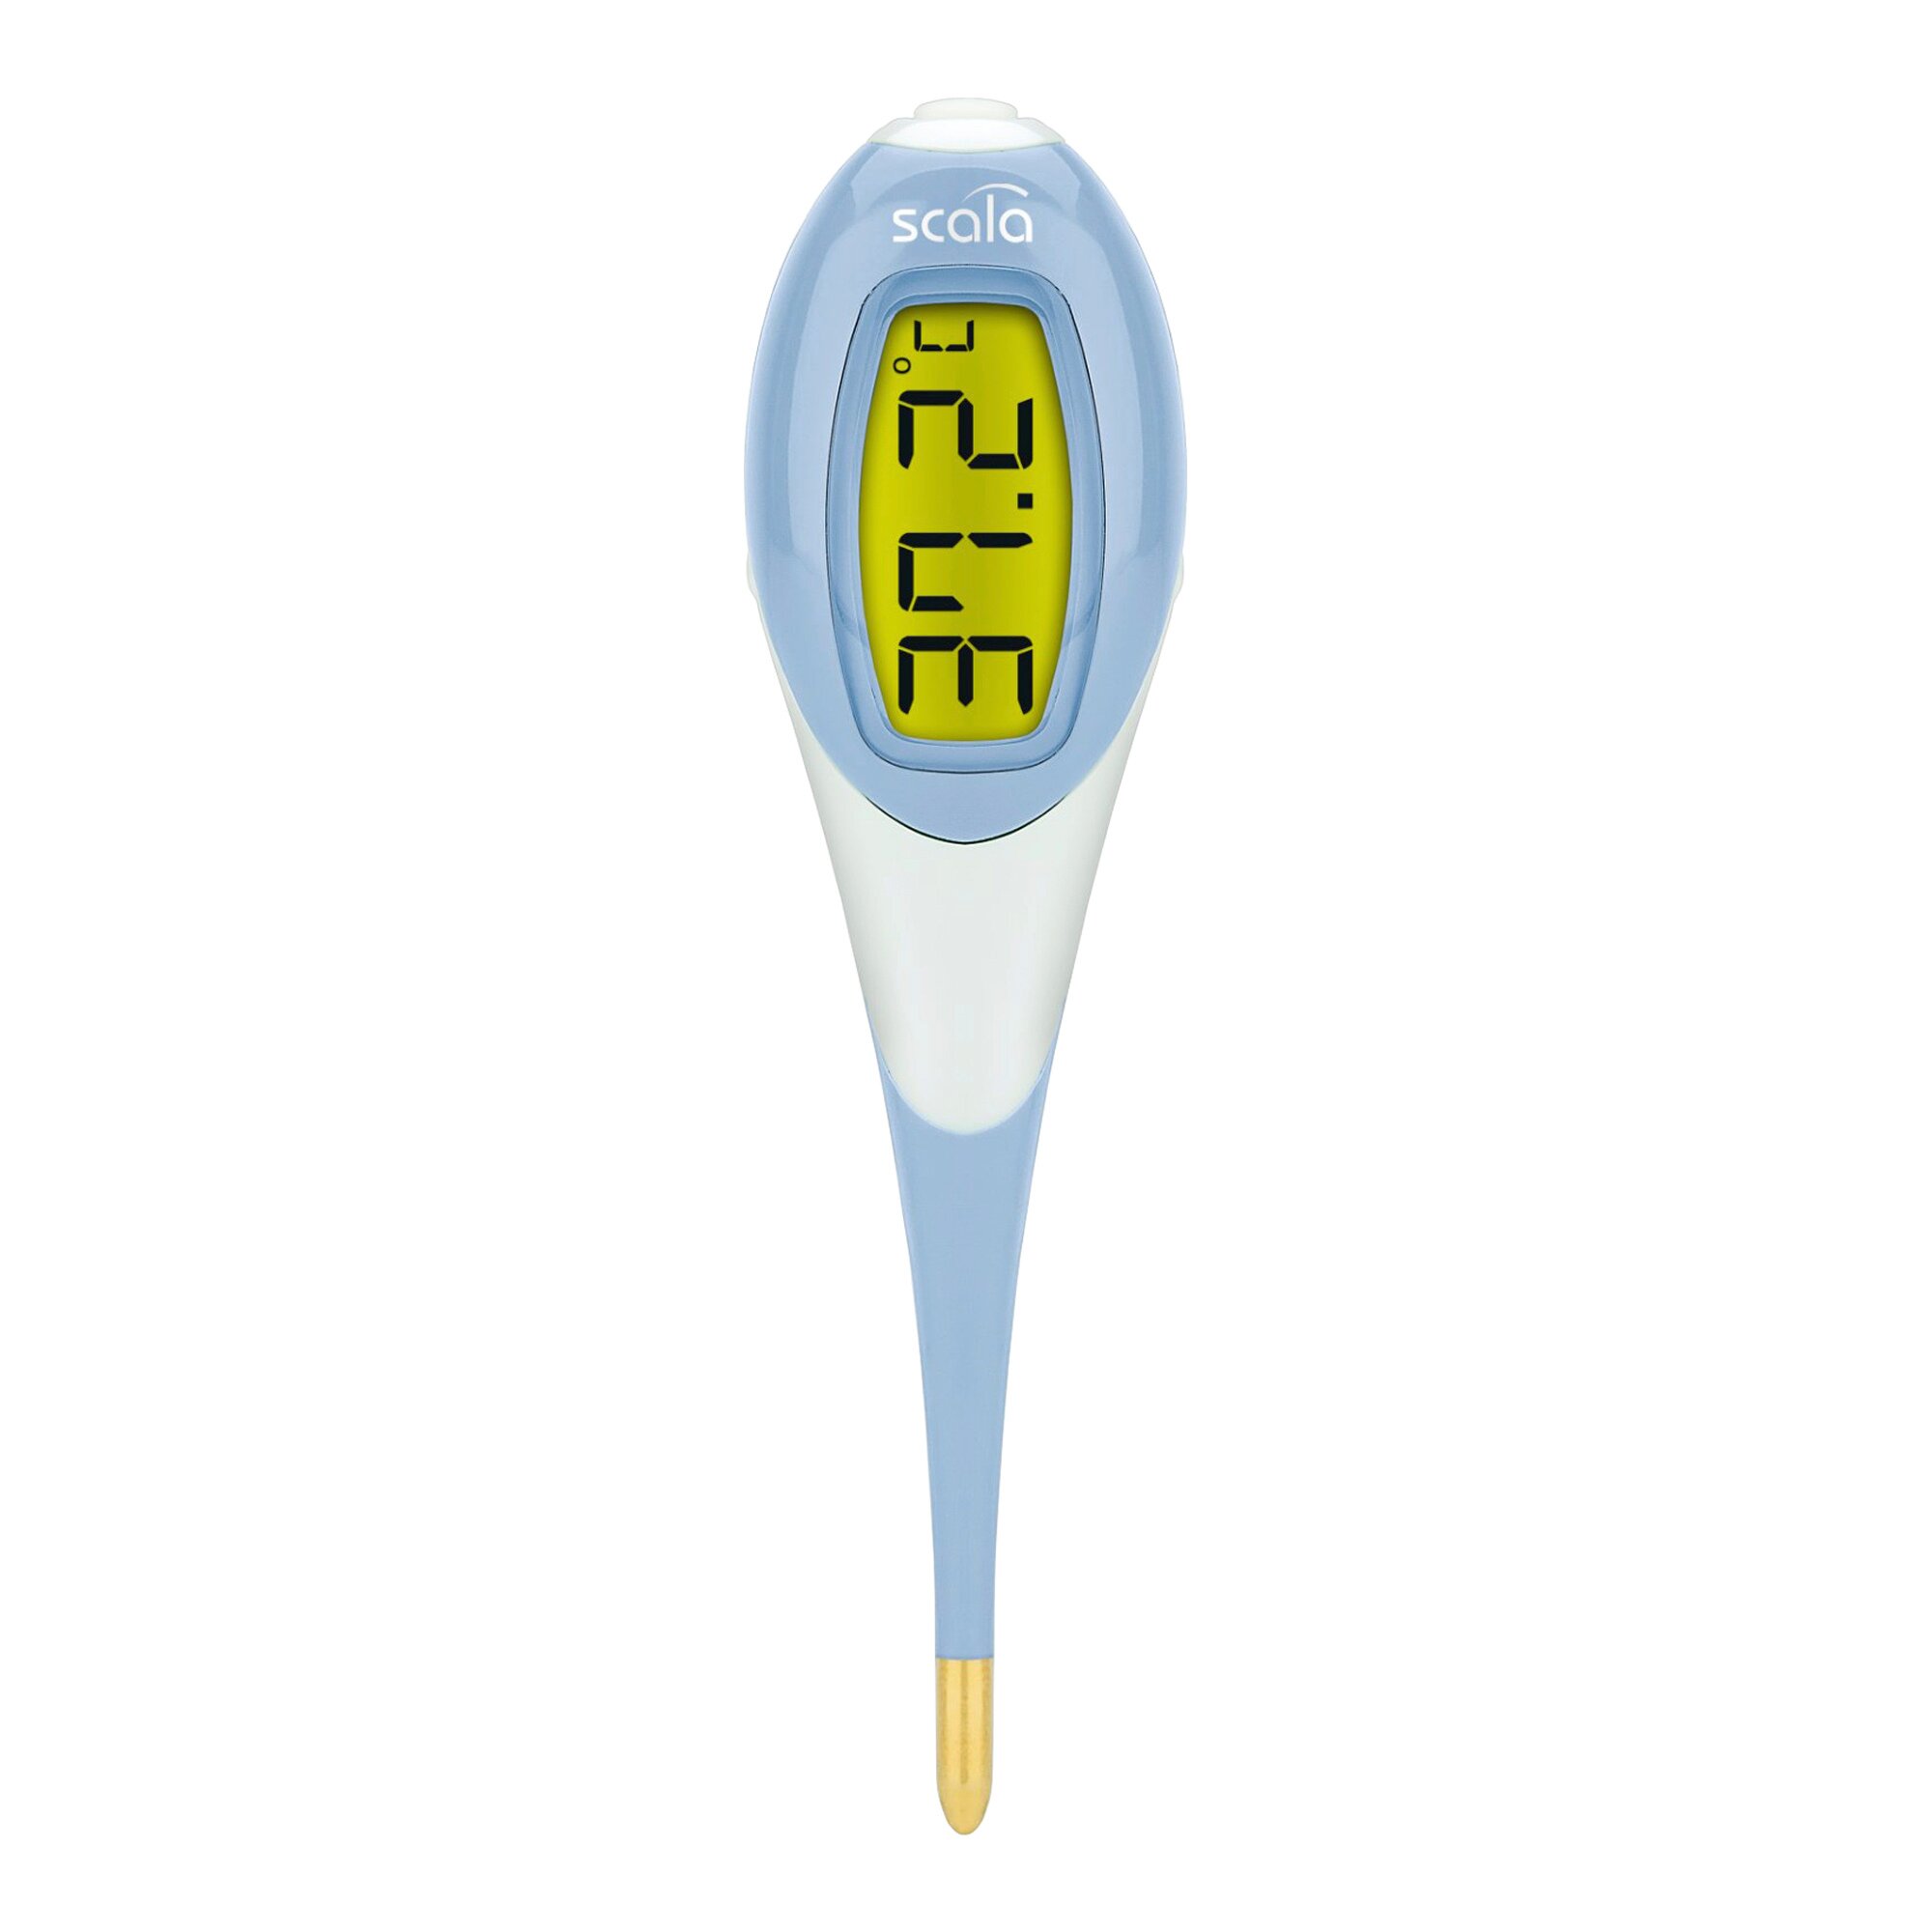 Image of Digitales Fieberthermometer